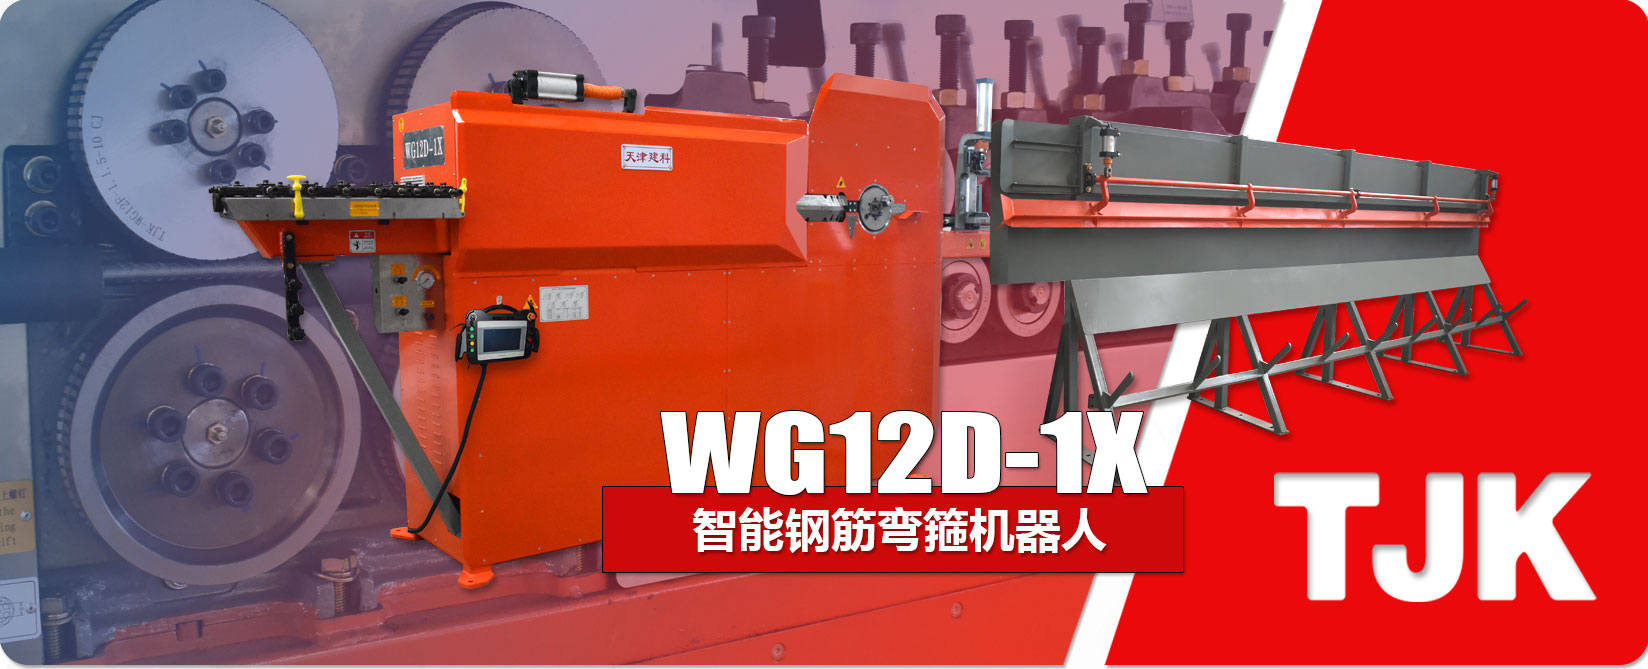 WG12D-1X产品特点_03.jpg